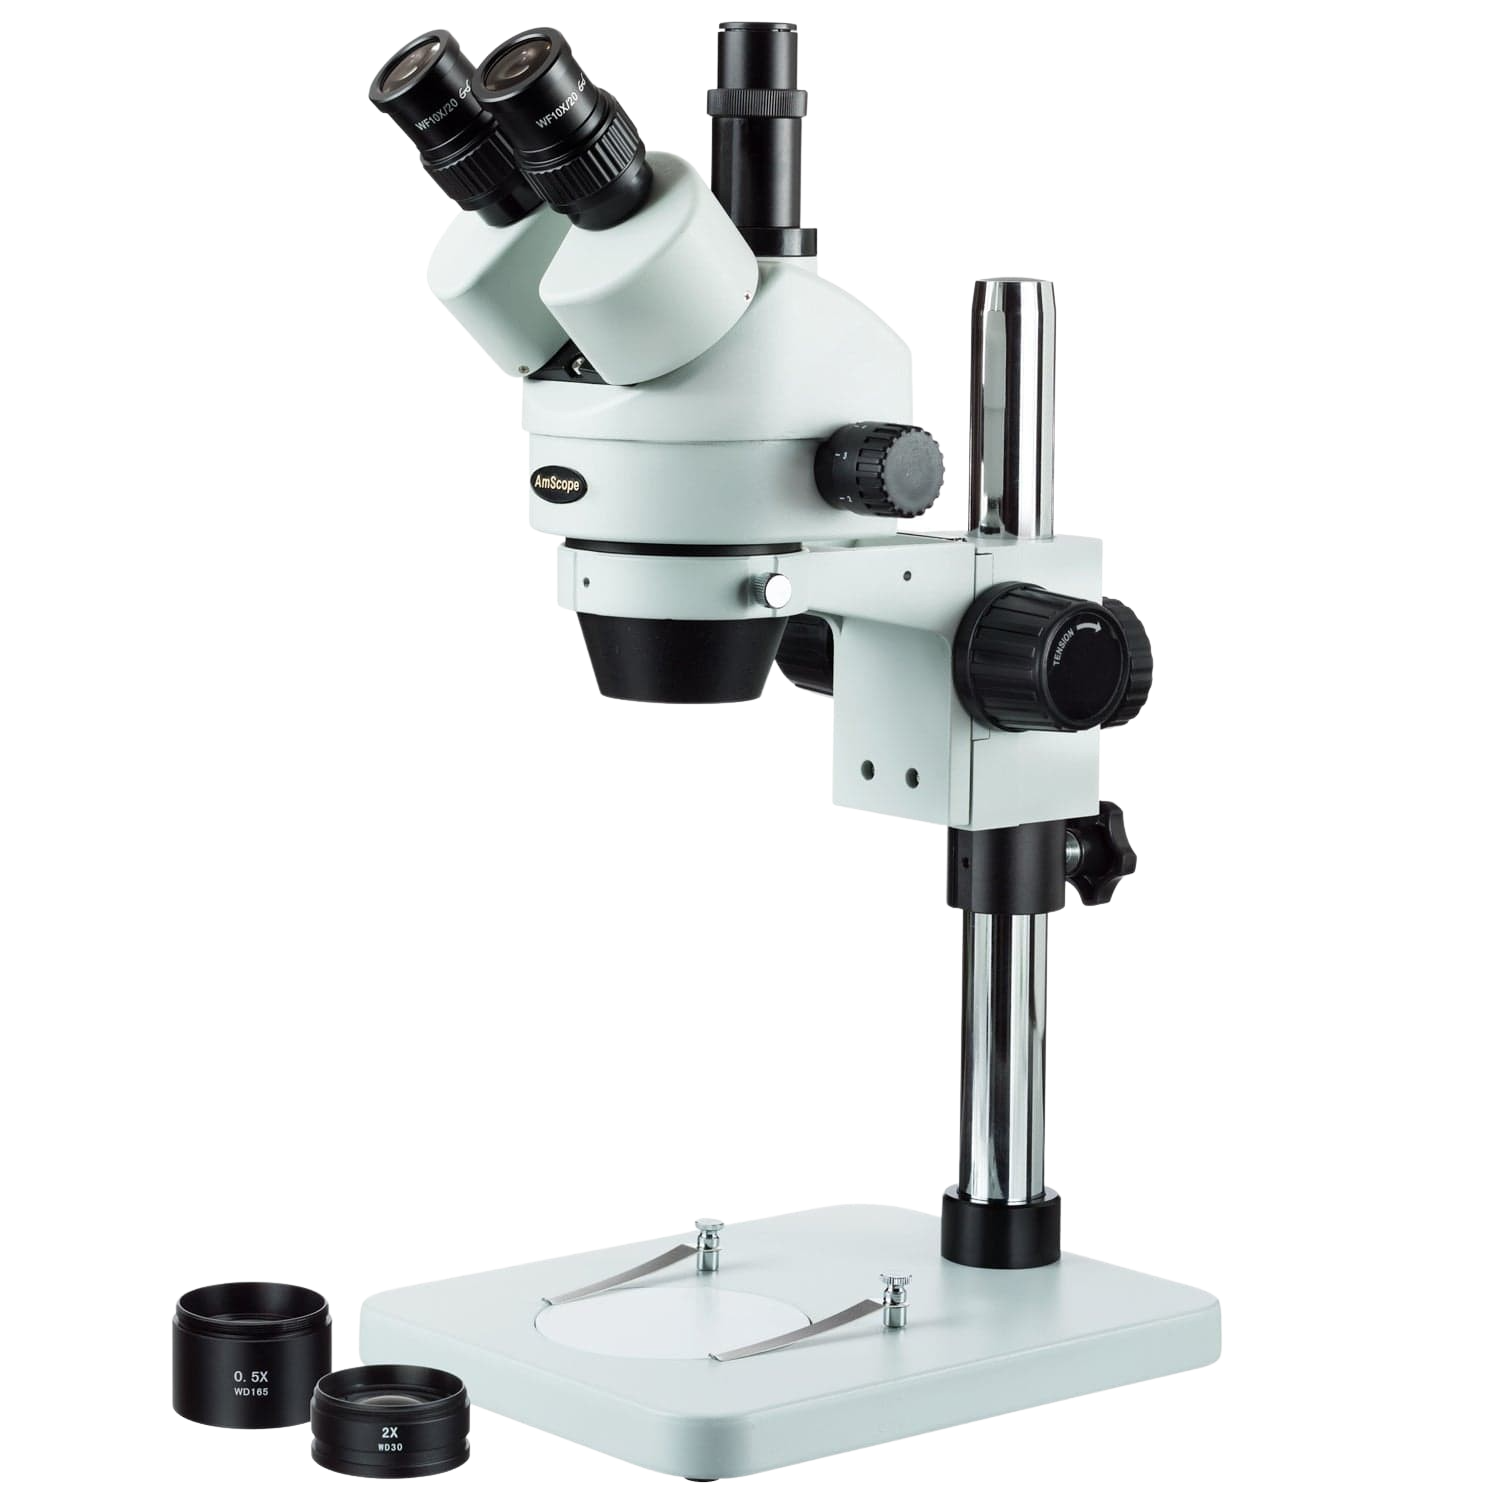 AmScope, Amscope SM-1TSZ-V203 3.5X - 90X Zoom Trinocular Stereo Microscope with Table Pillar Stand New